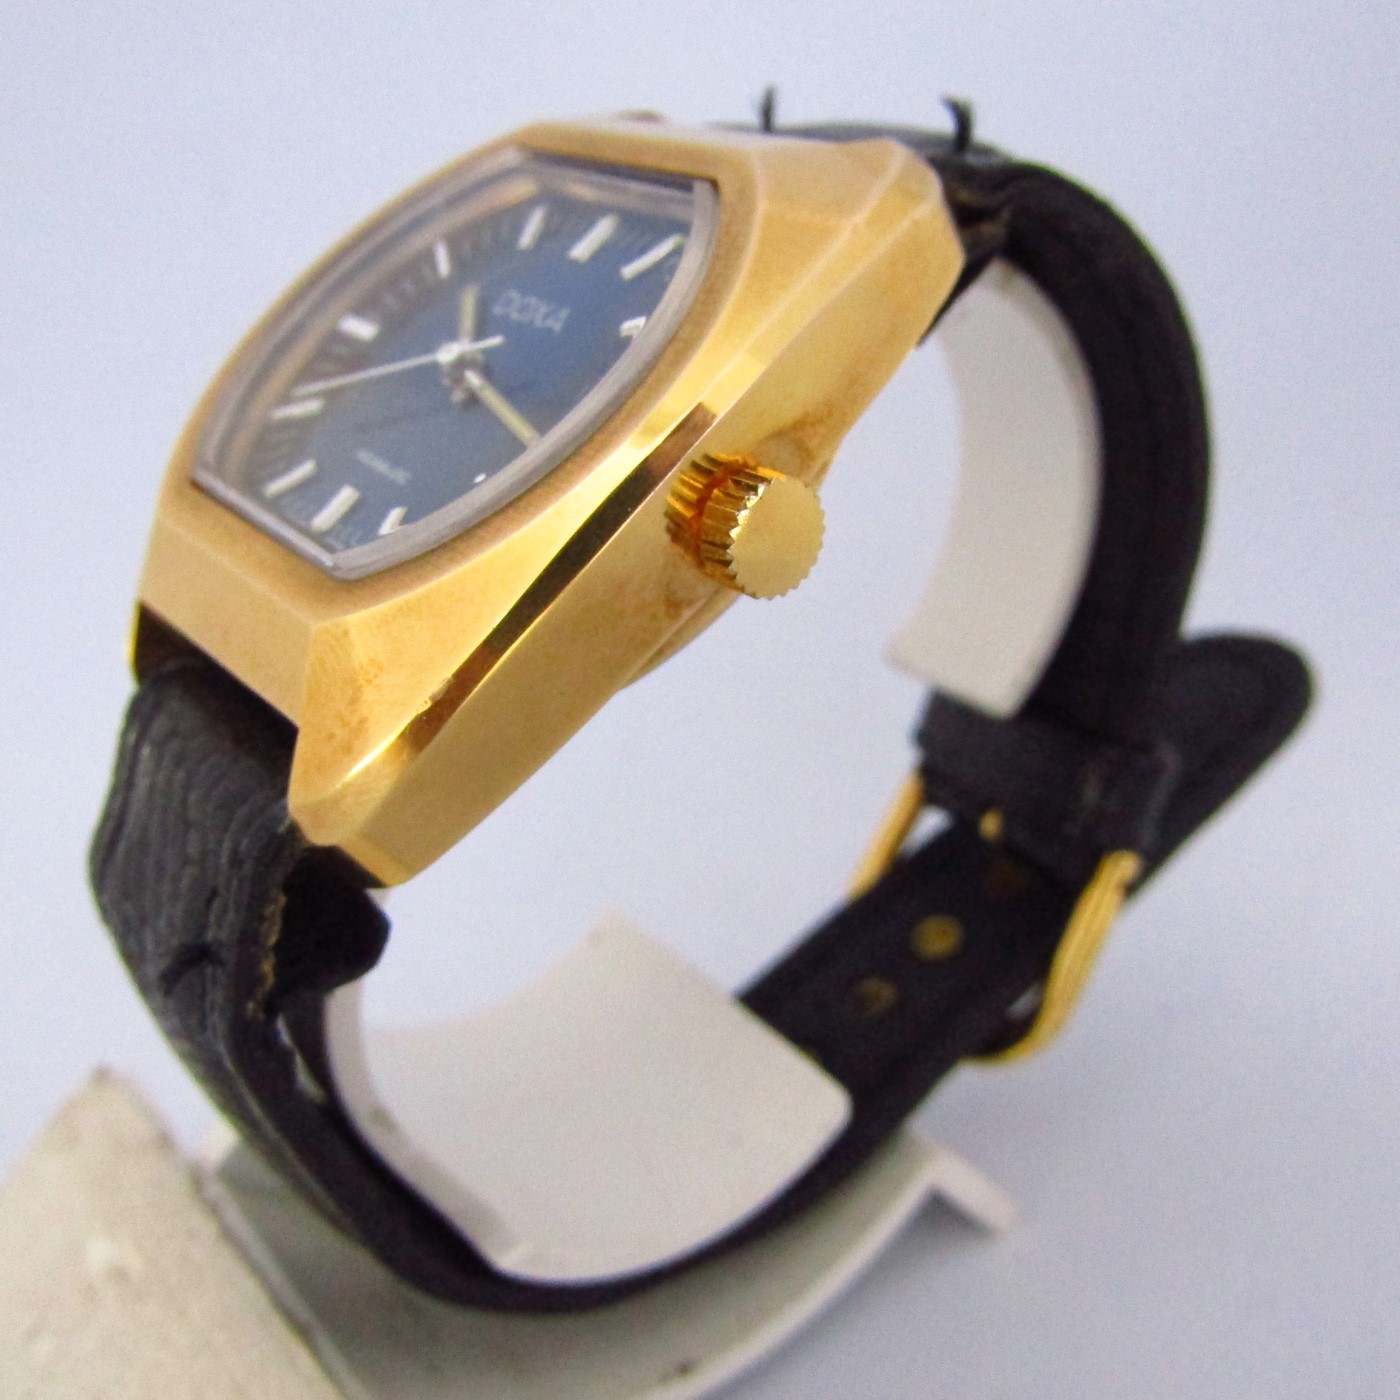 DOXA INCABLOC. Reloj de pulsera para caballero. Suiza, ca. 1970